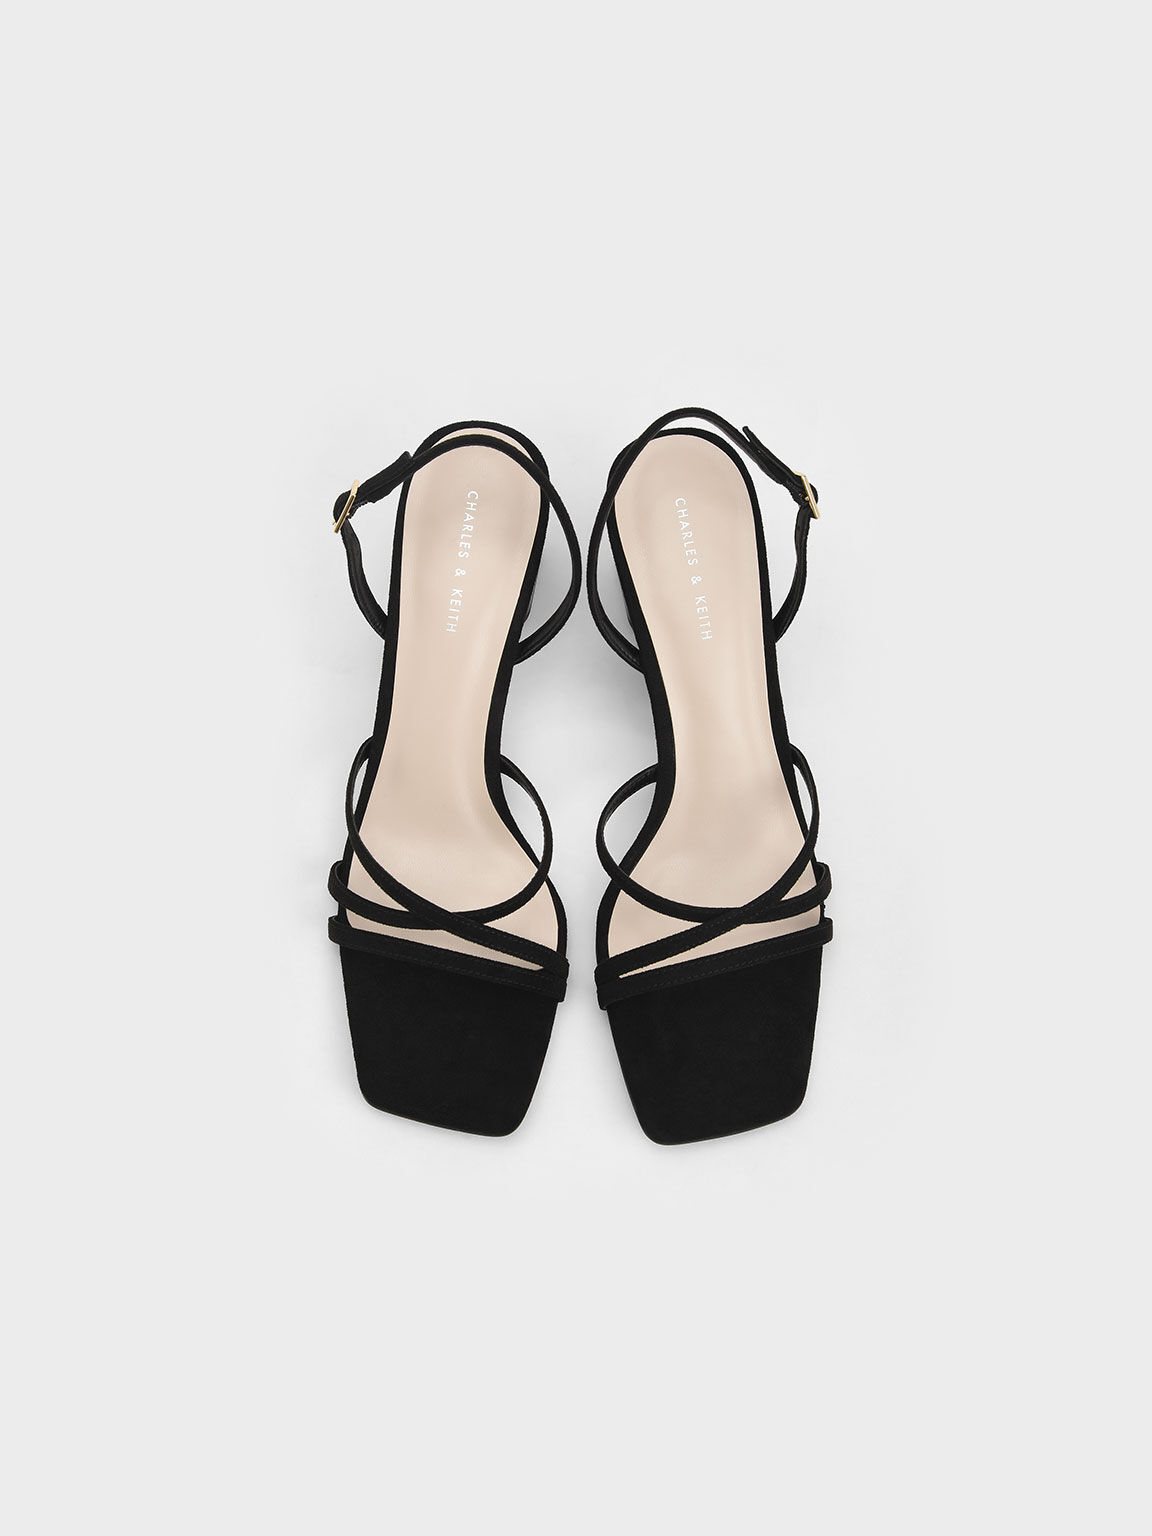 Textured Square Toe Slingback Sandals, Black, hi-res